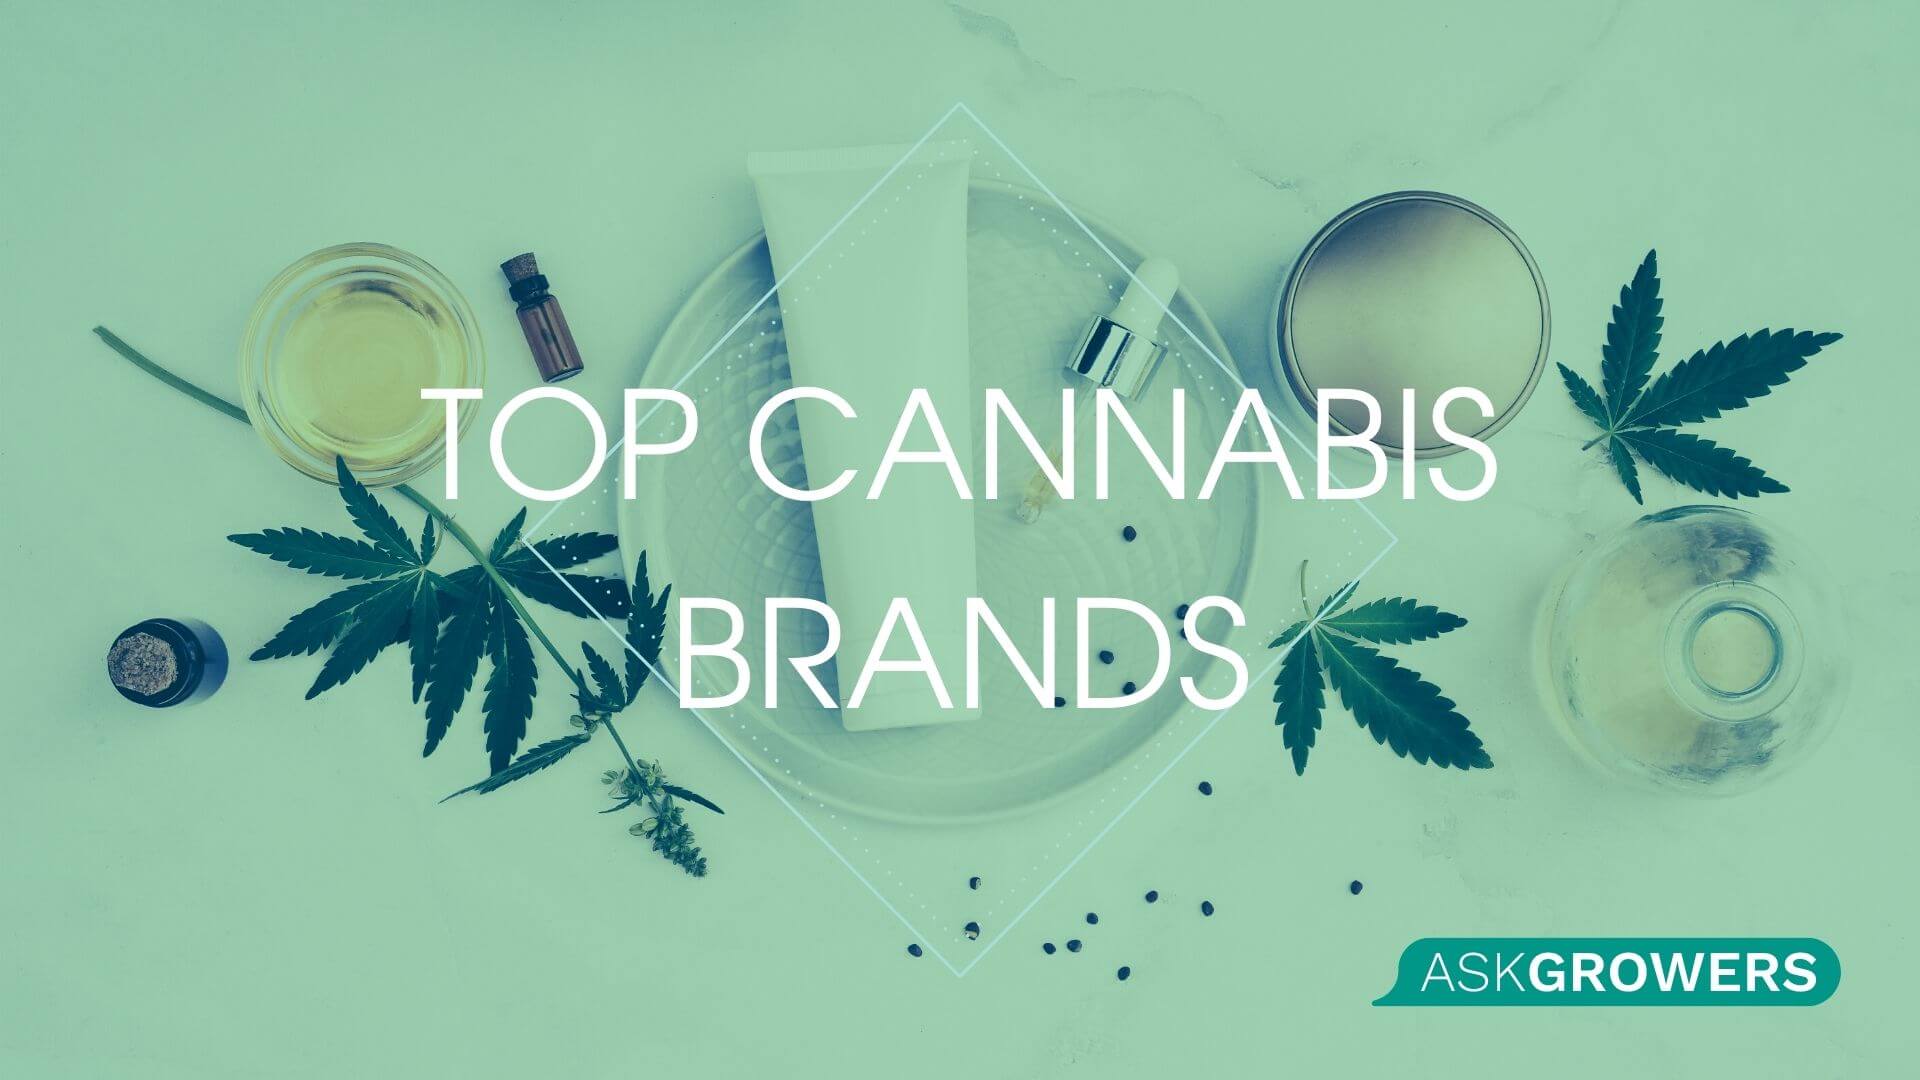 Top Cannabis Brands